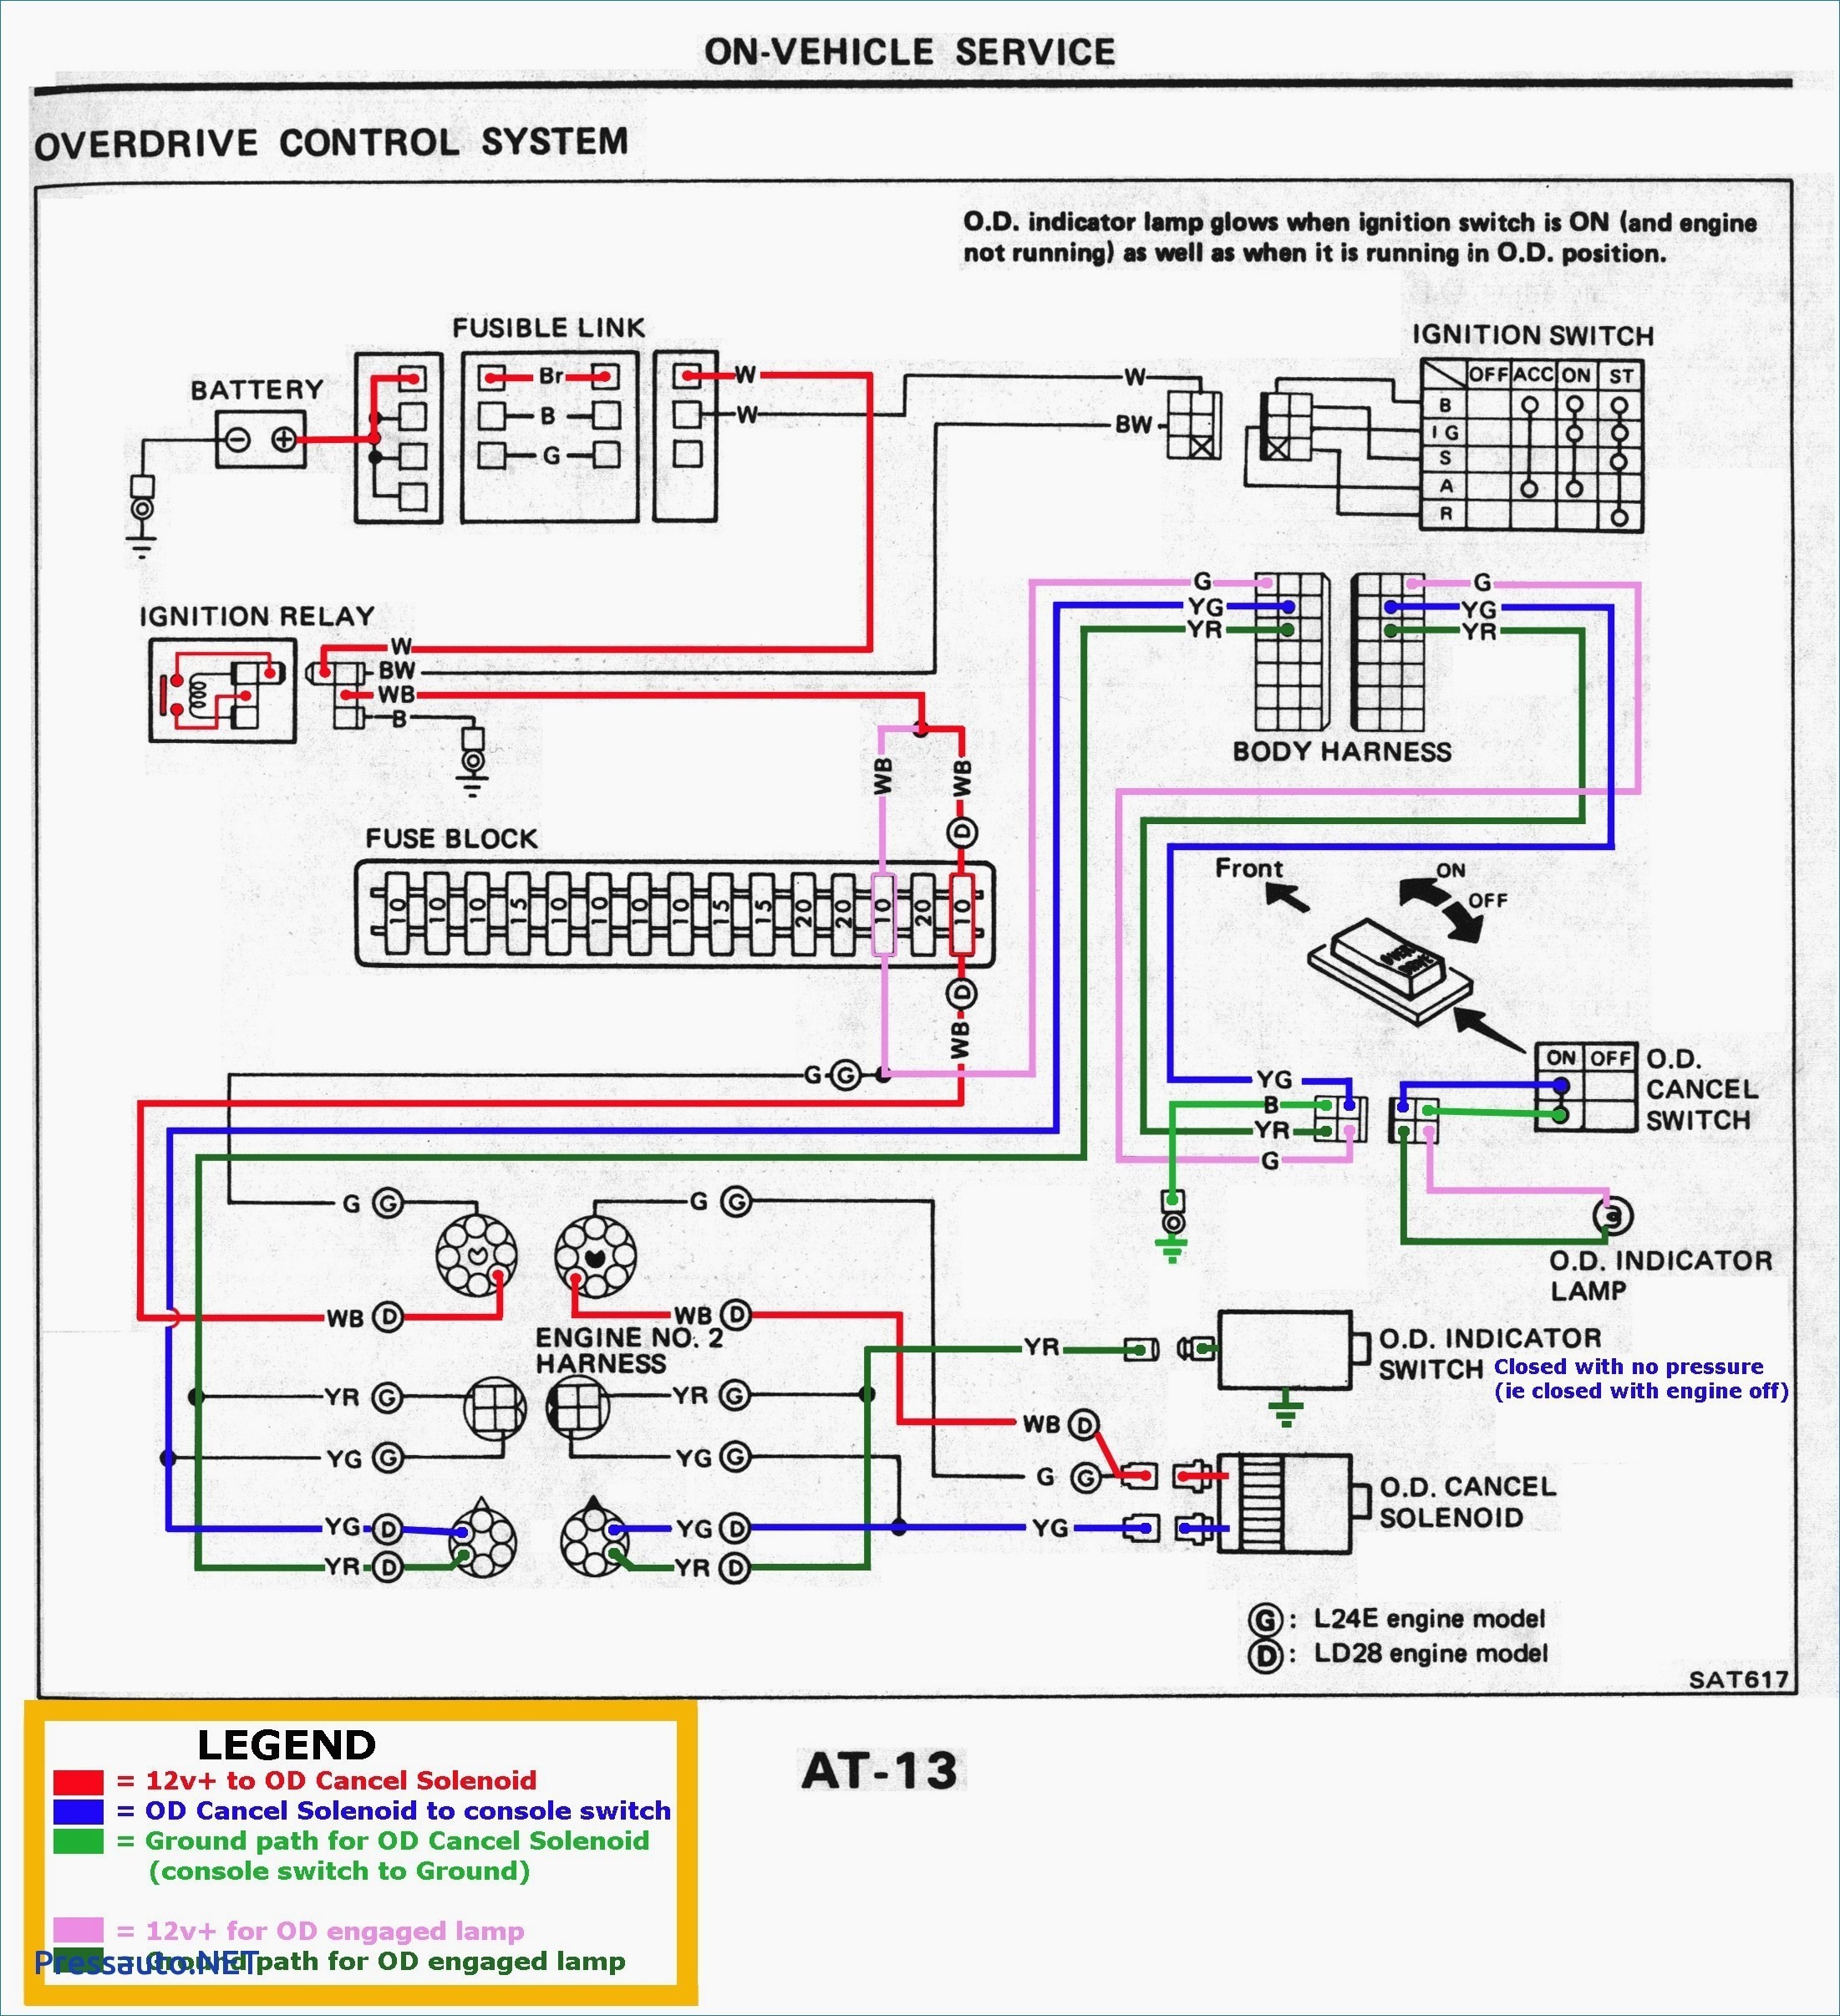 Wiring Diagram 1963 Chevy Nova Wiring Diagrams Konsult 65 Nova Wiring Diagram